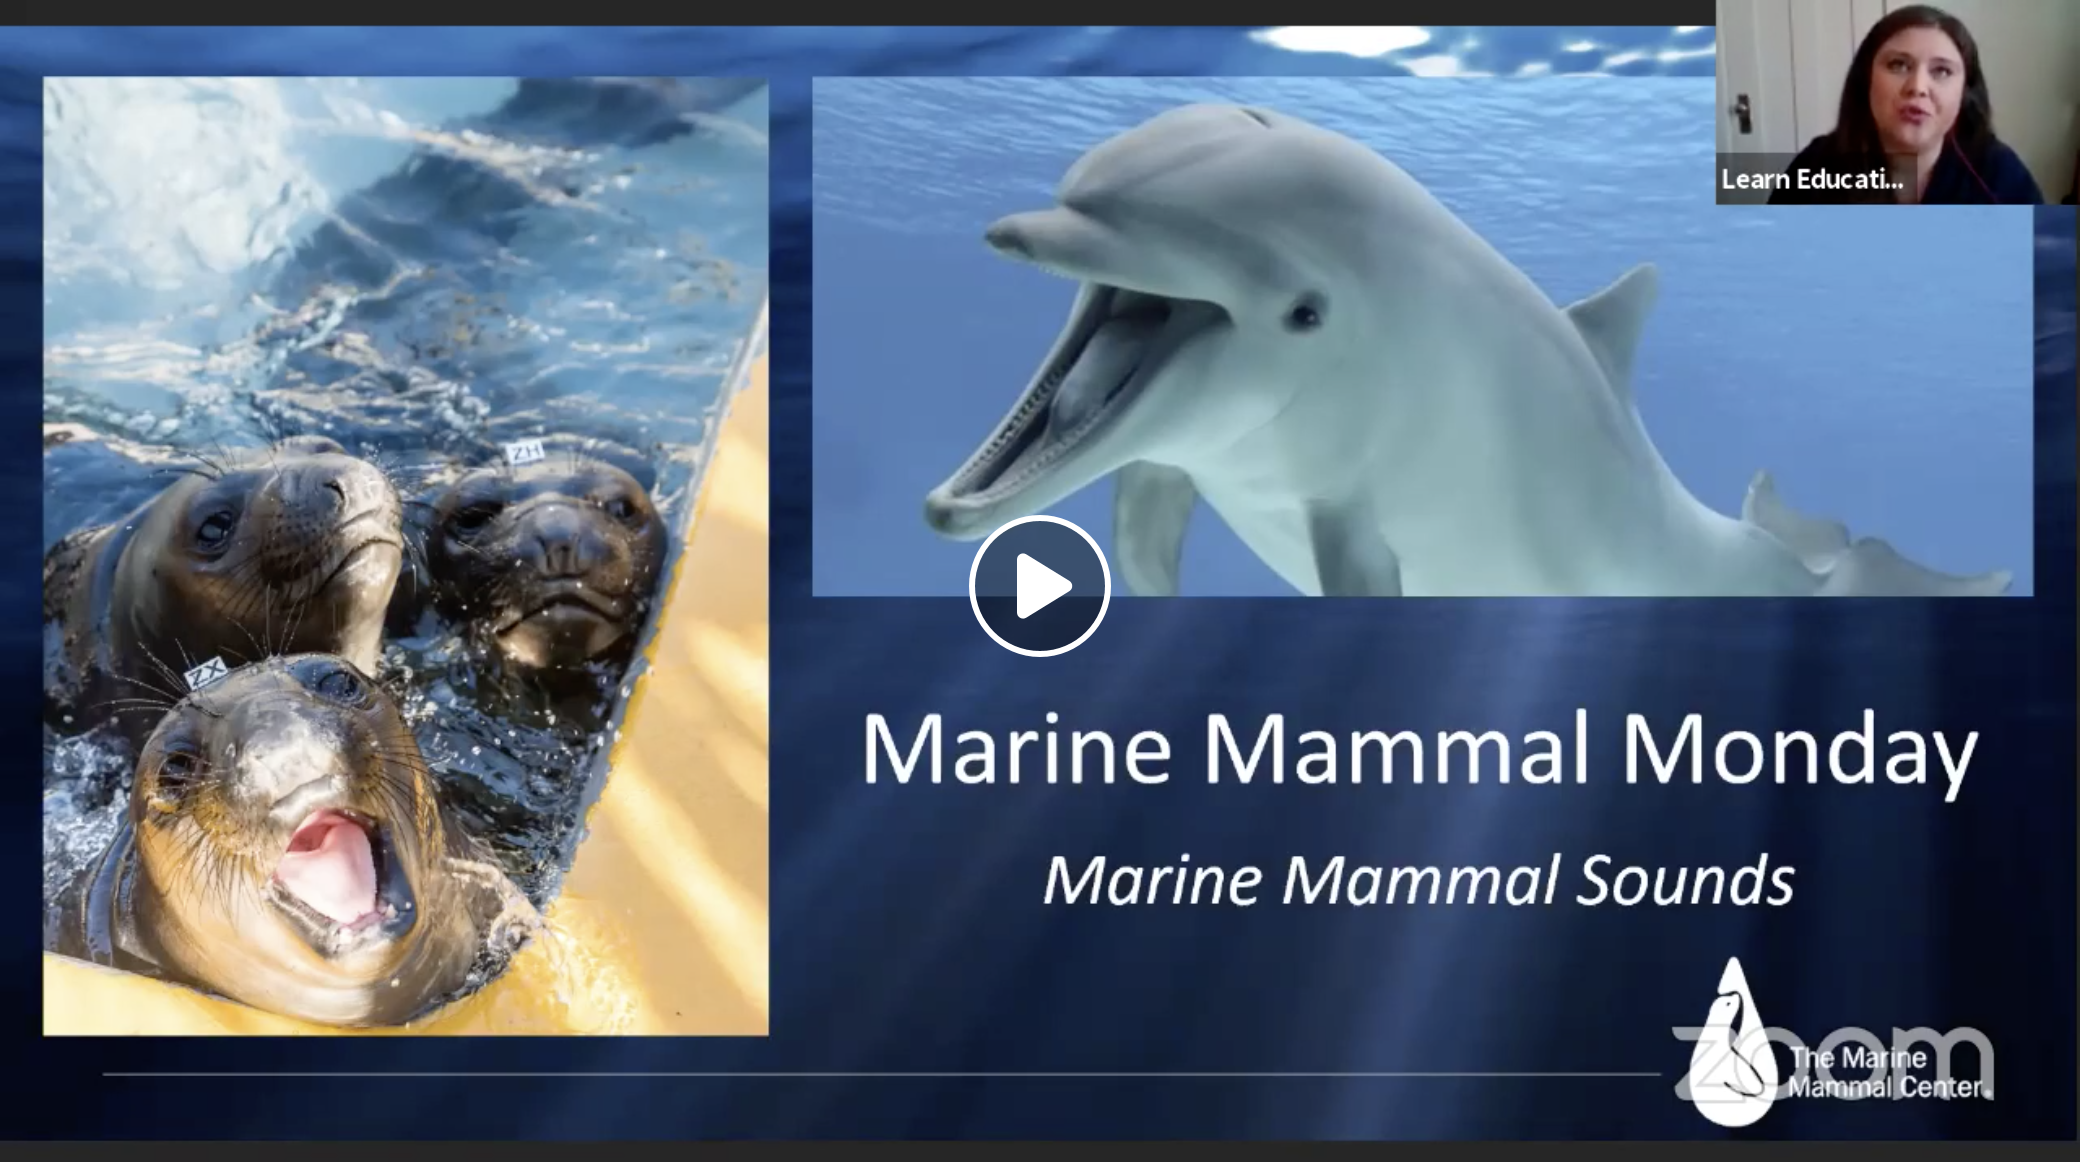 Marine Mammal Monday: Marine Mammal Sounds